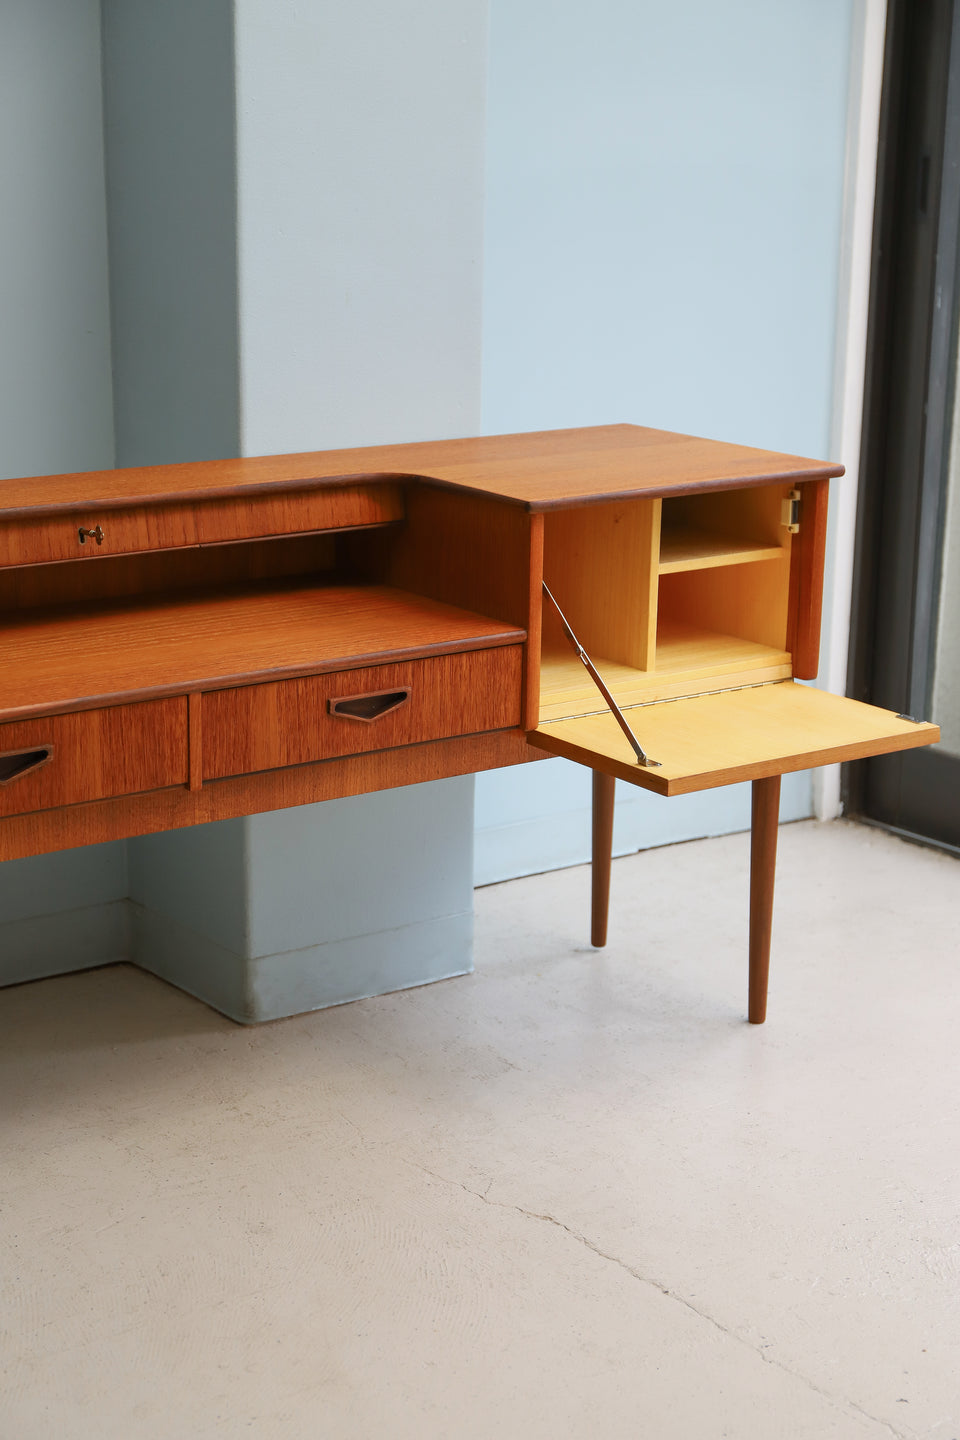 Scandinavian Vintage Sideboard Table/北欧ヴィンテージ サイドボード テーブル ドレッサー